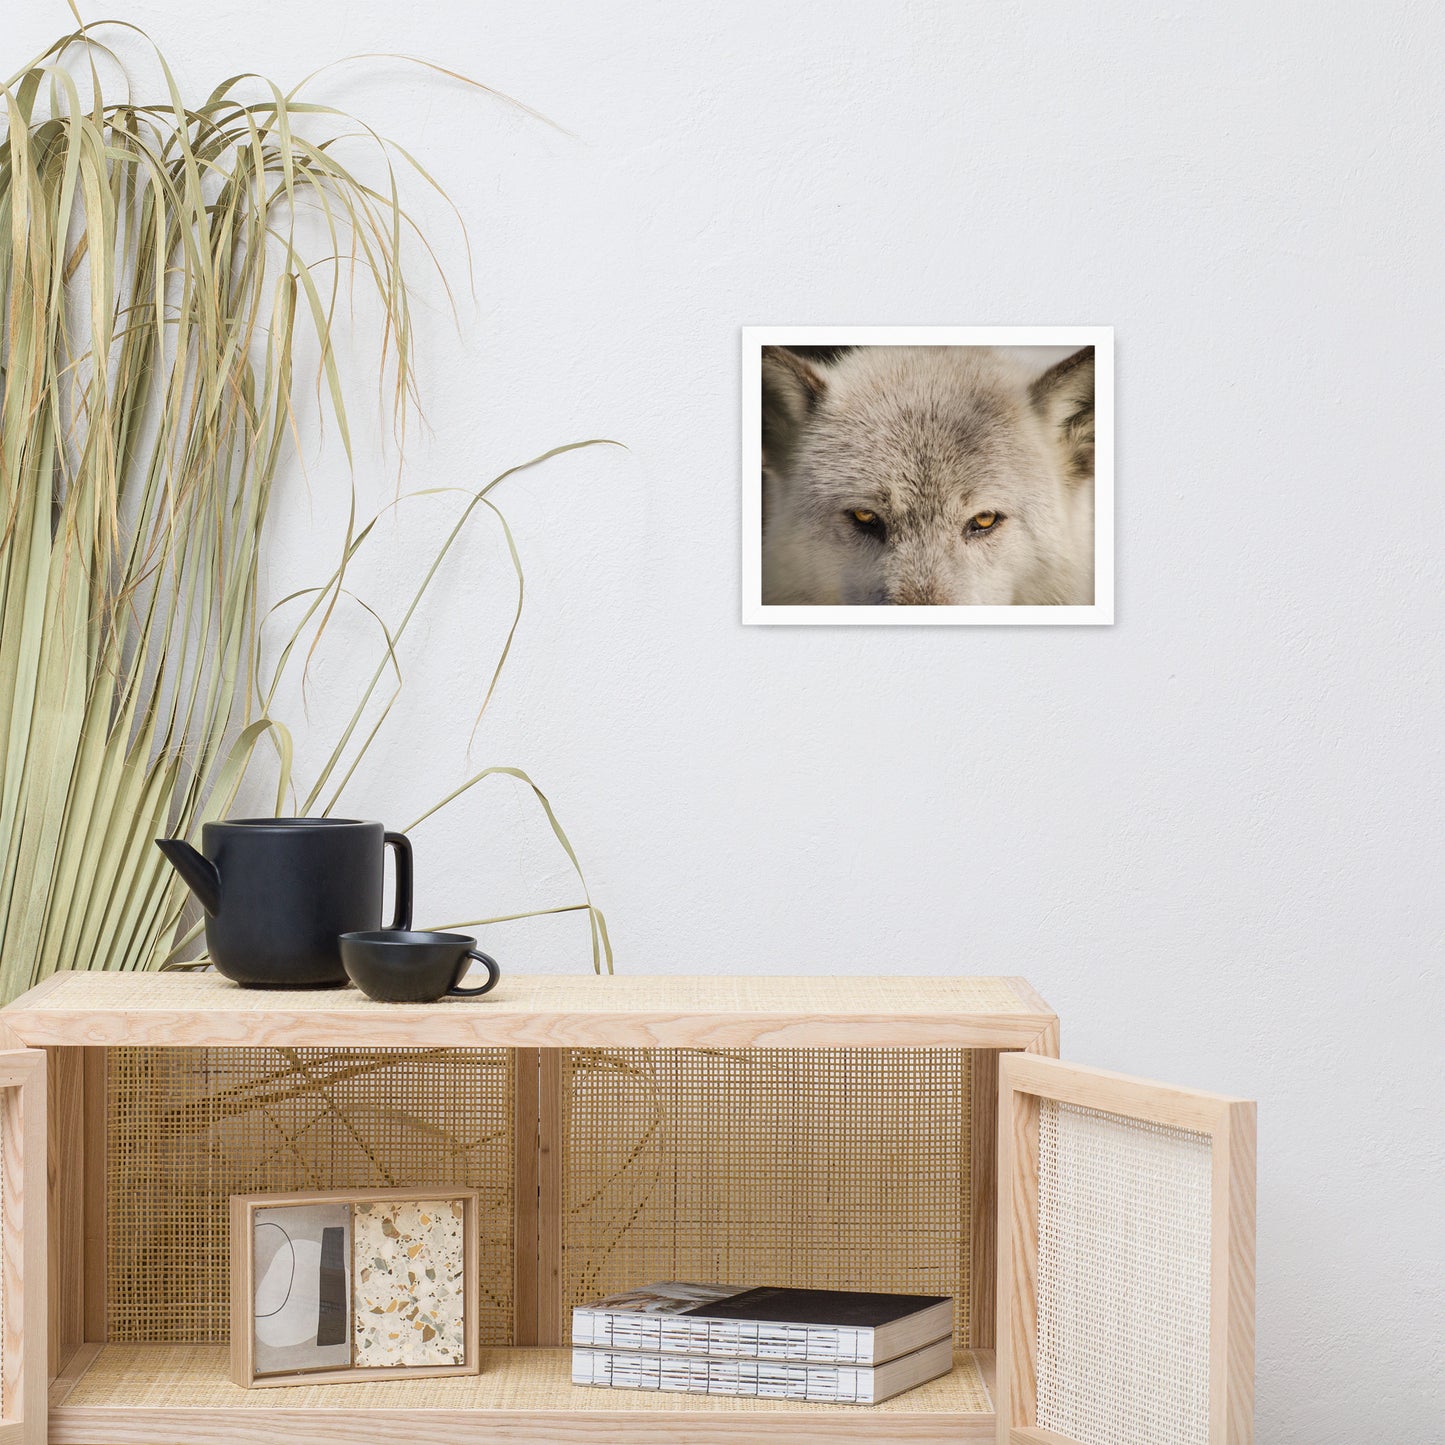 Wolf Eyes Animal / Wildlife Photograph Framed Wall Art Prints